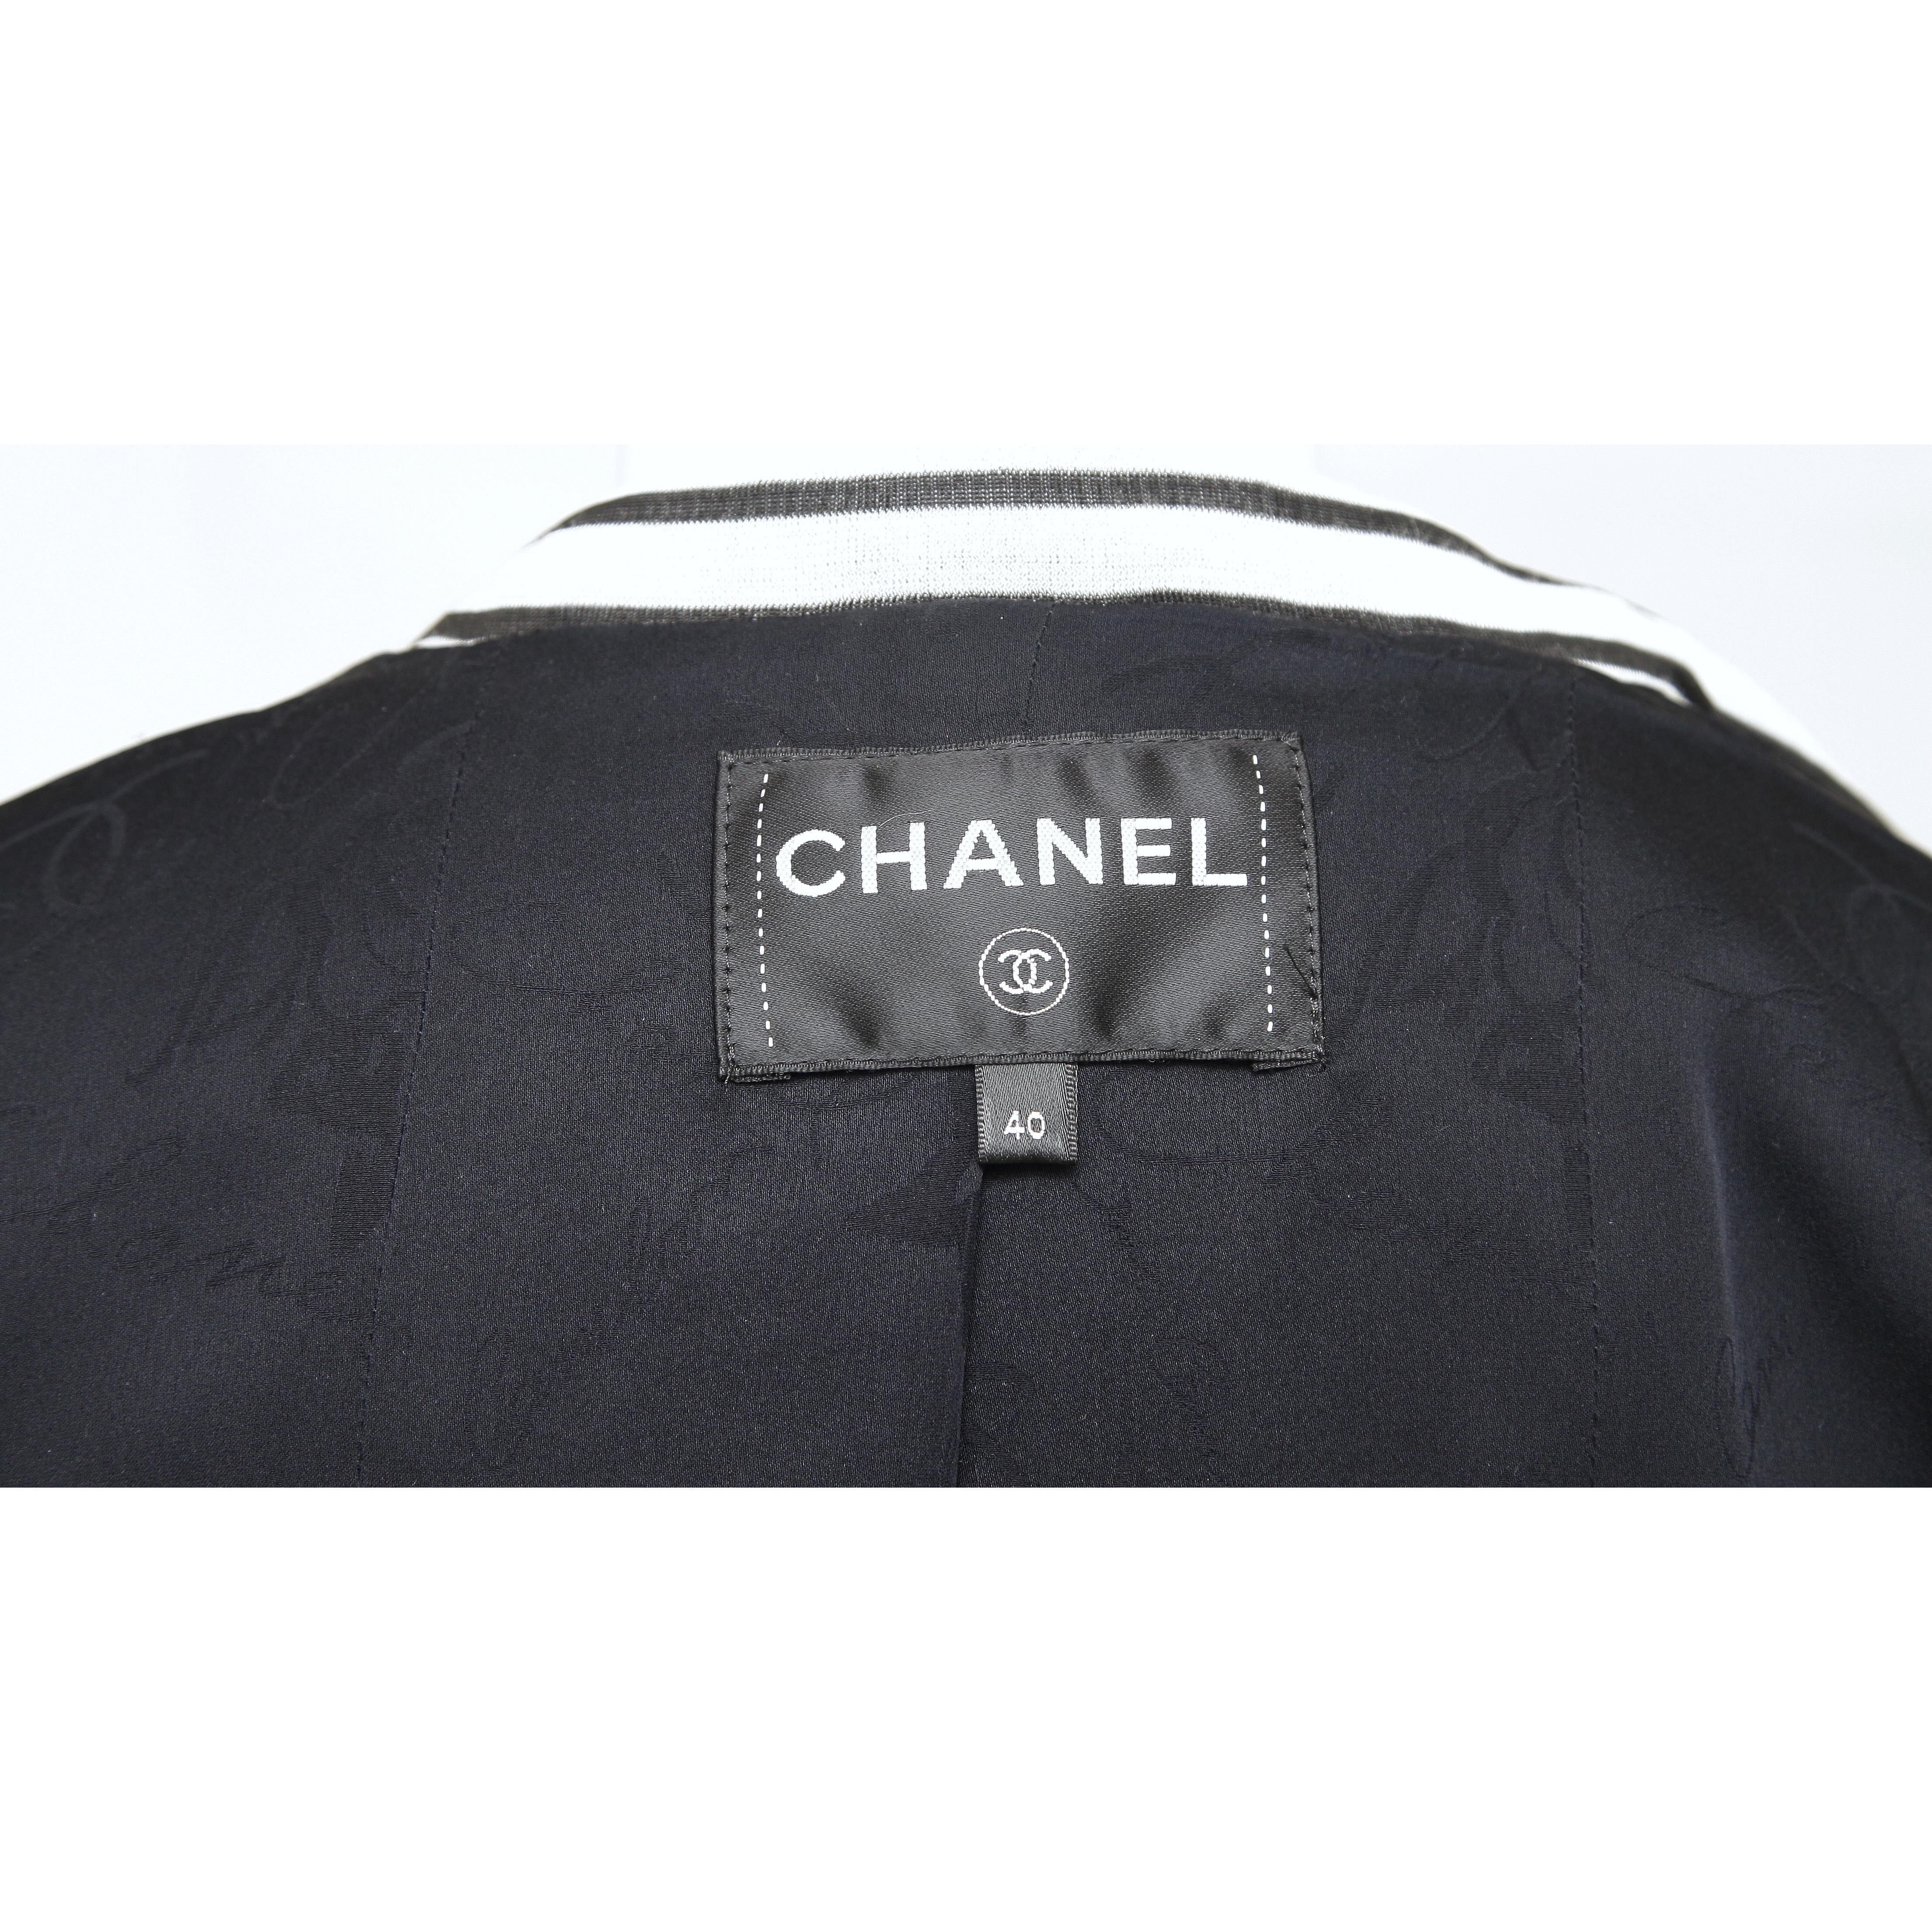 CHANEL Jacket Blazer Coat Tweed Navy Blue Beaded Buttons Zipper 2017 Sz 40 For Sale 4